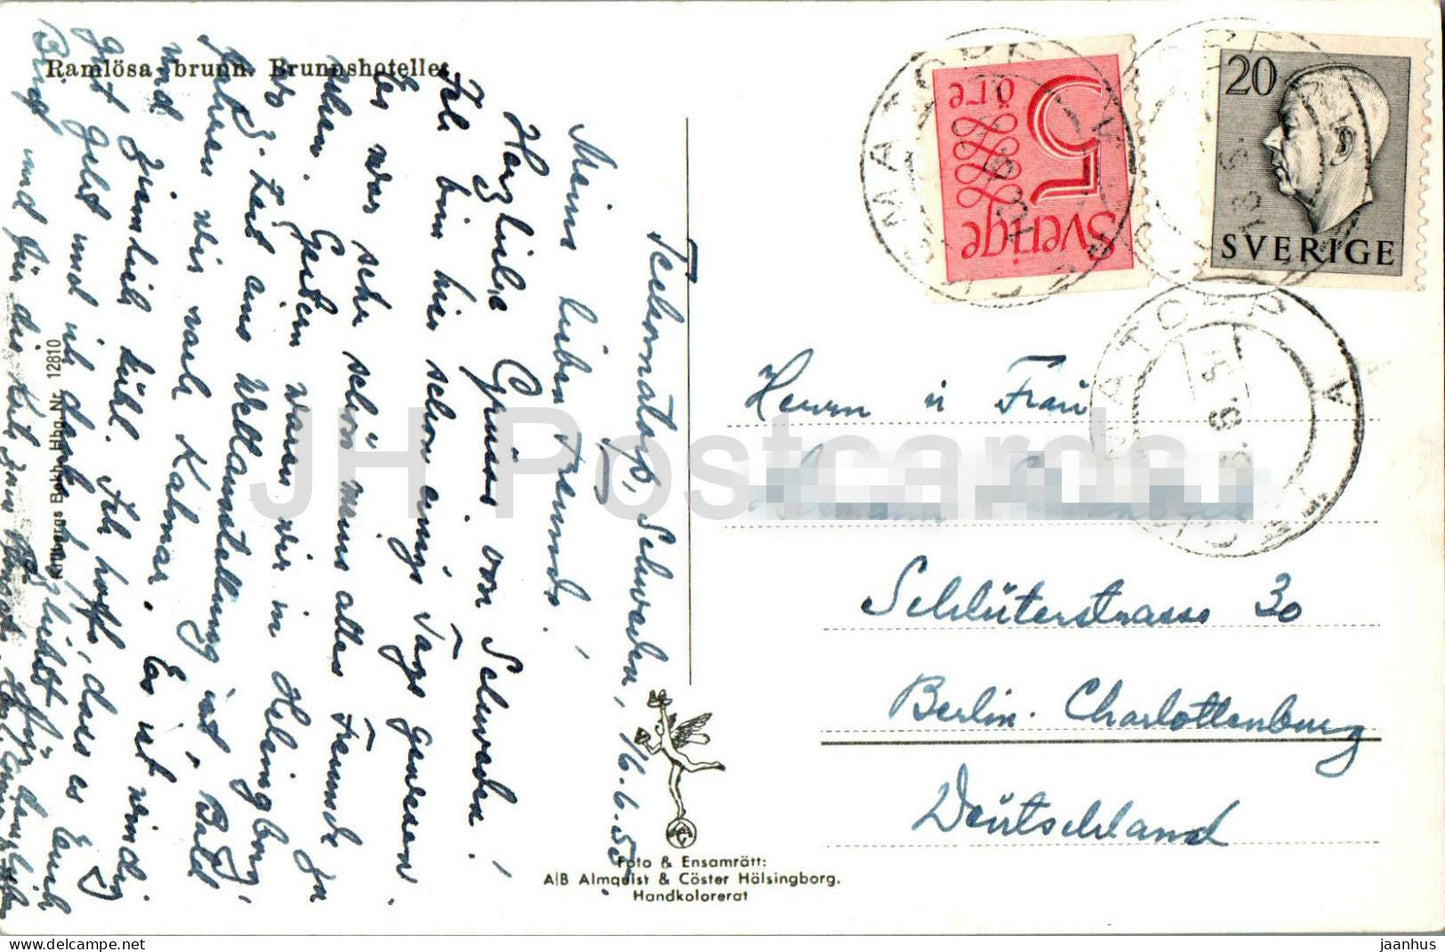 Ramlosa brunn - Brunnshotelle - hôtel - 161 - carte postale ancienne - 1955 - Suède - utilisé 